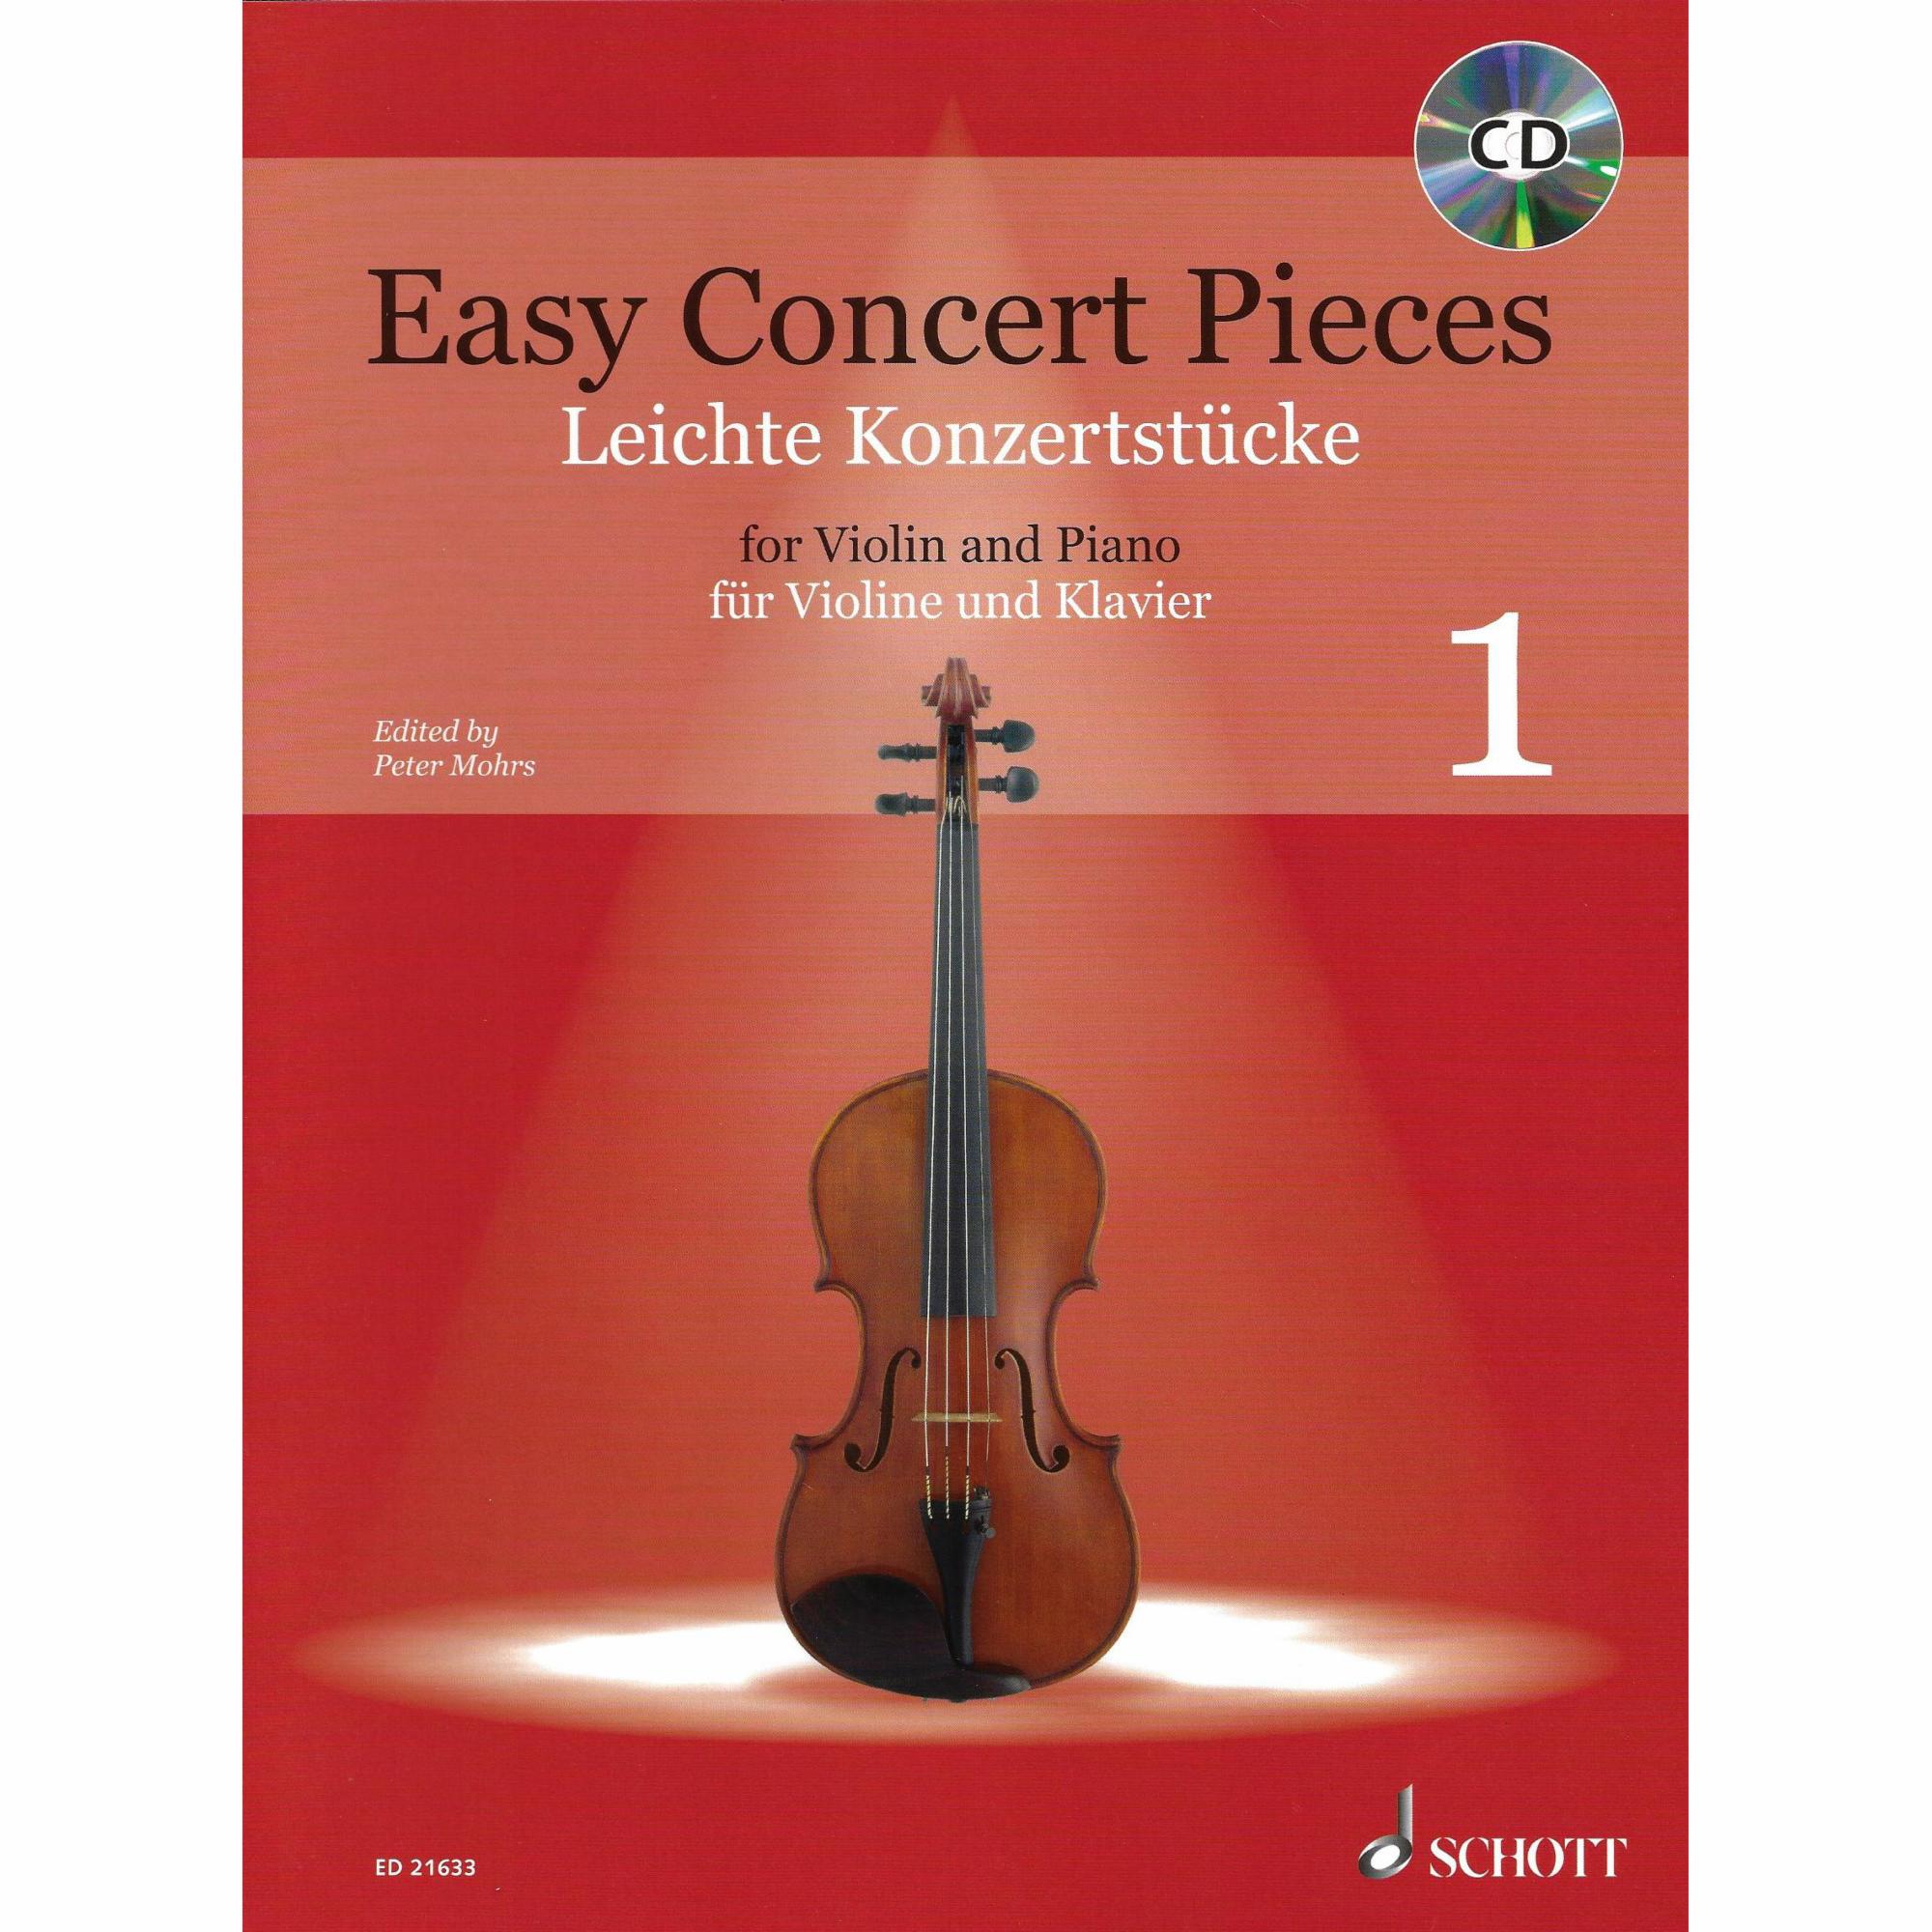 Easy Concert Pieces, Vols. 1-3 for Violin and Piano